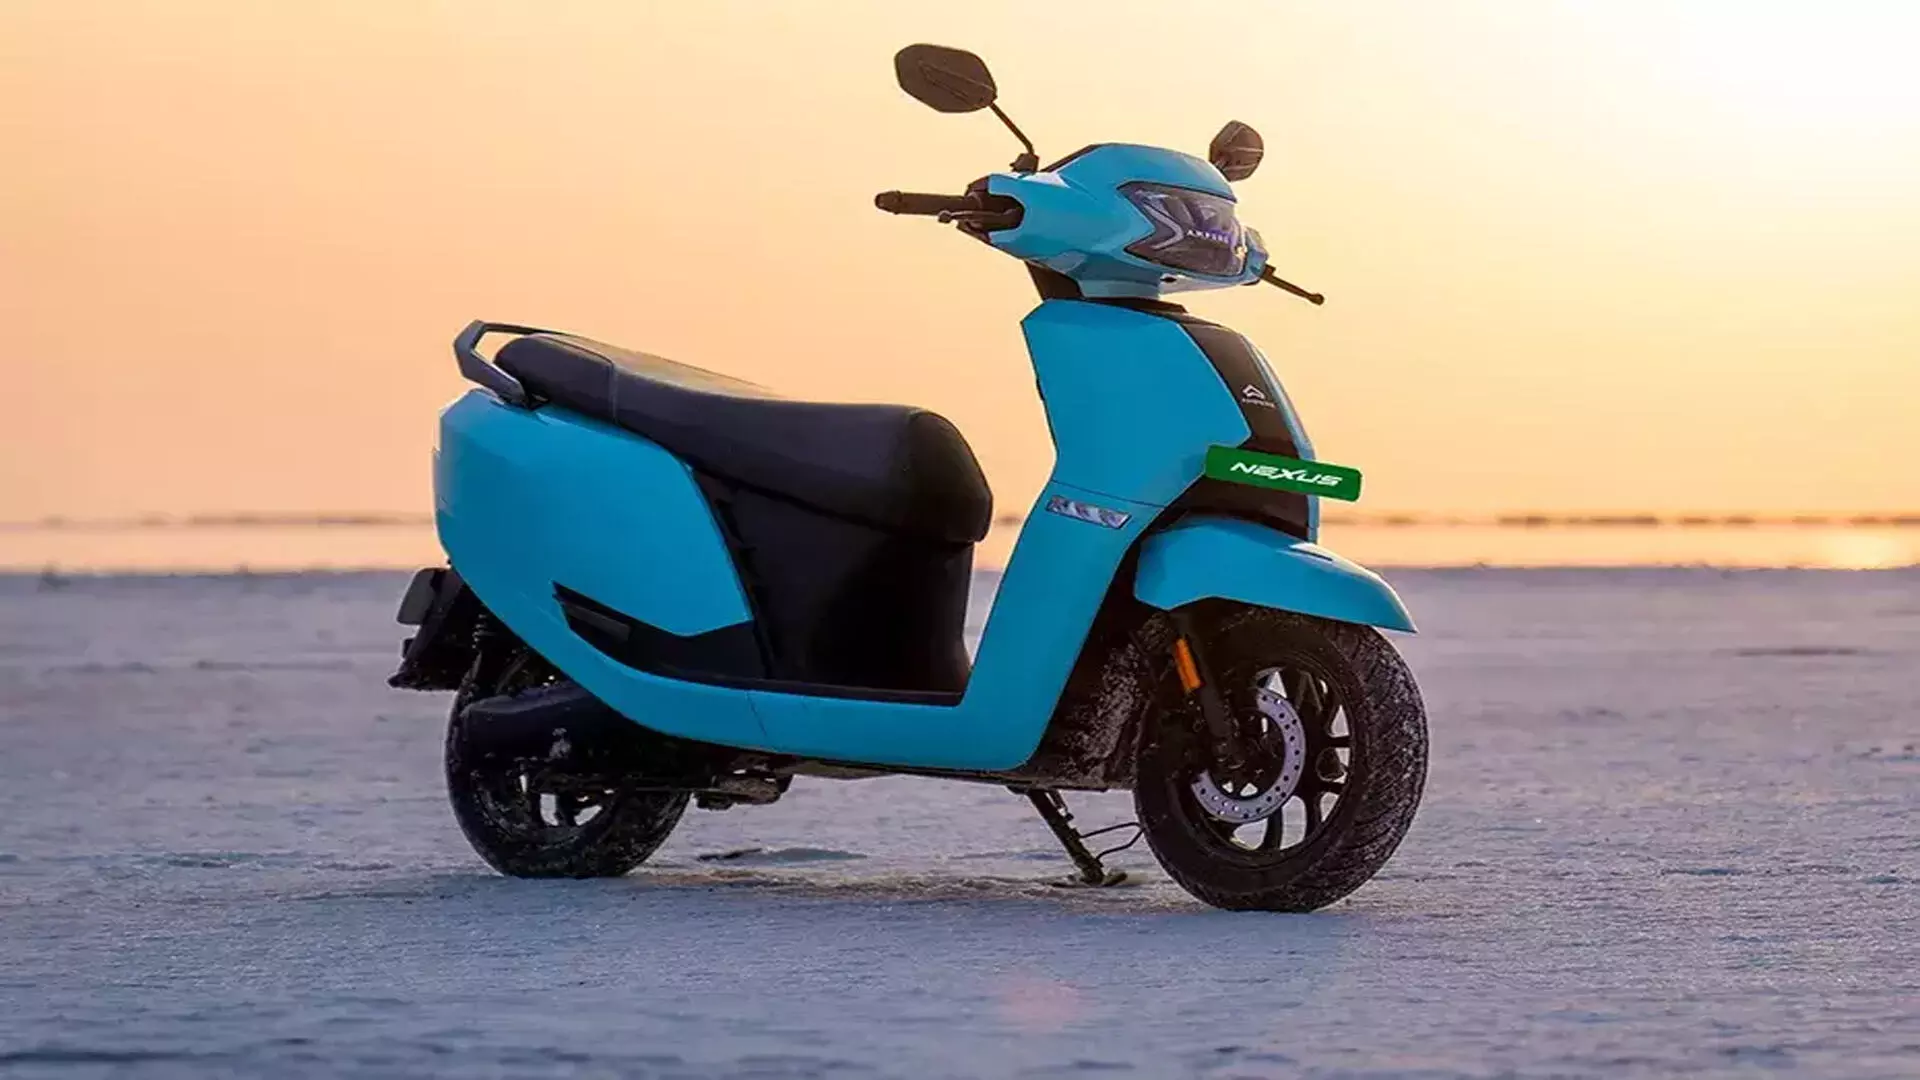 E-scooter एम्पीयर नेक्सस की कीमत 1.09 लाख रुपये होगी